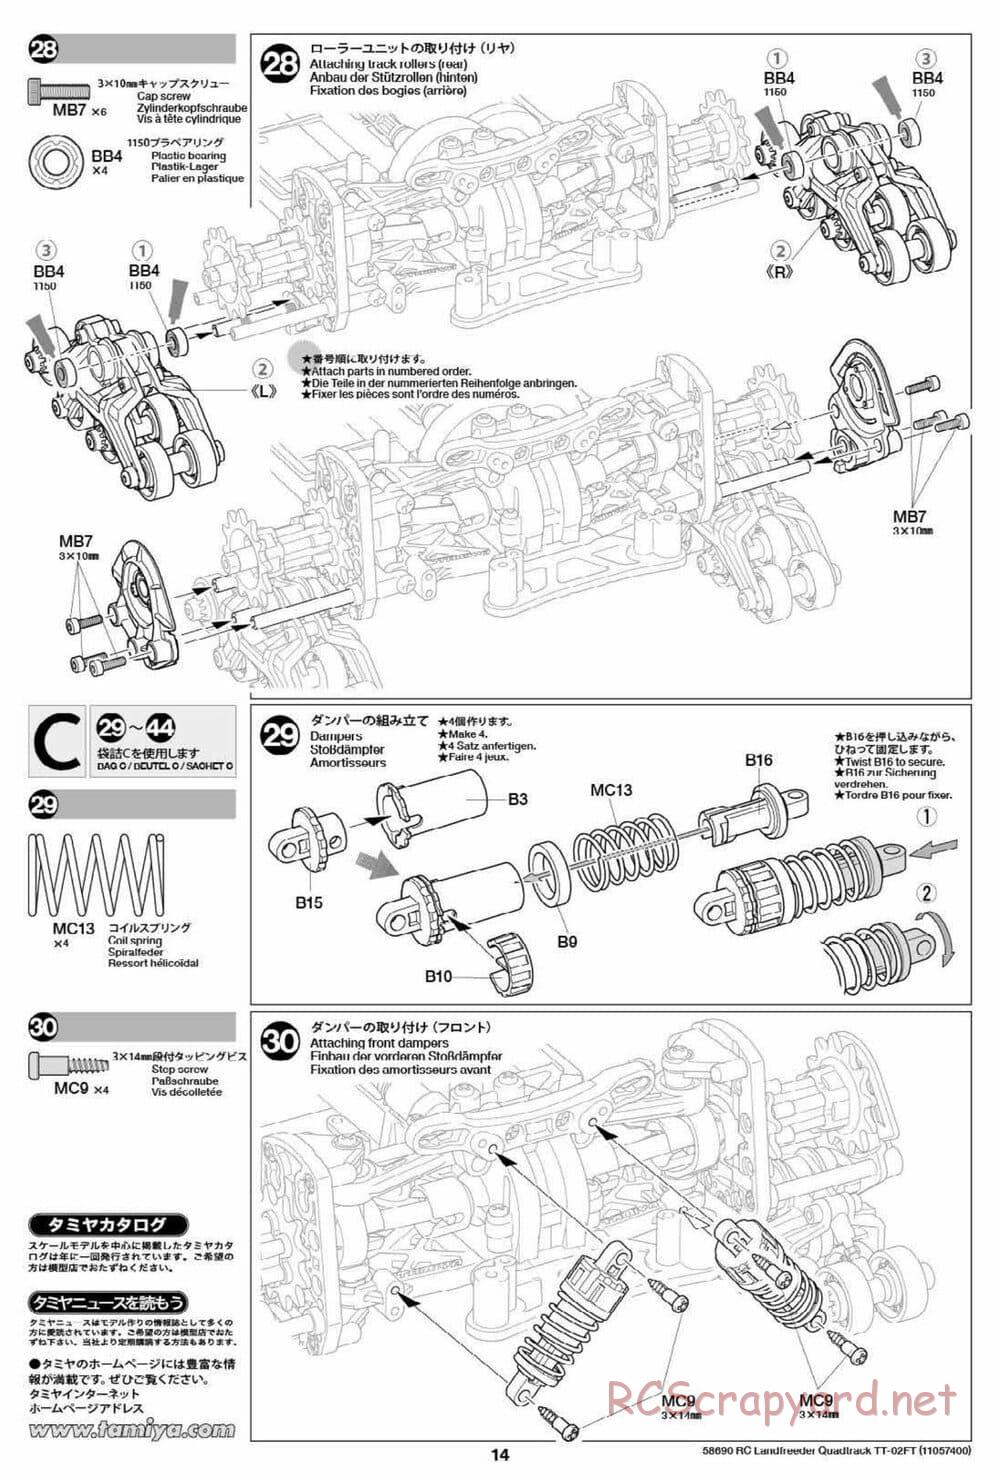 Tamiya - Landfreeder Quadtrack - TT-02FT Chassis - Manual - Page 14